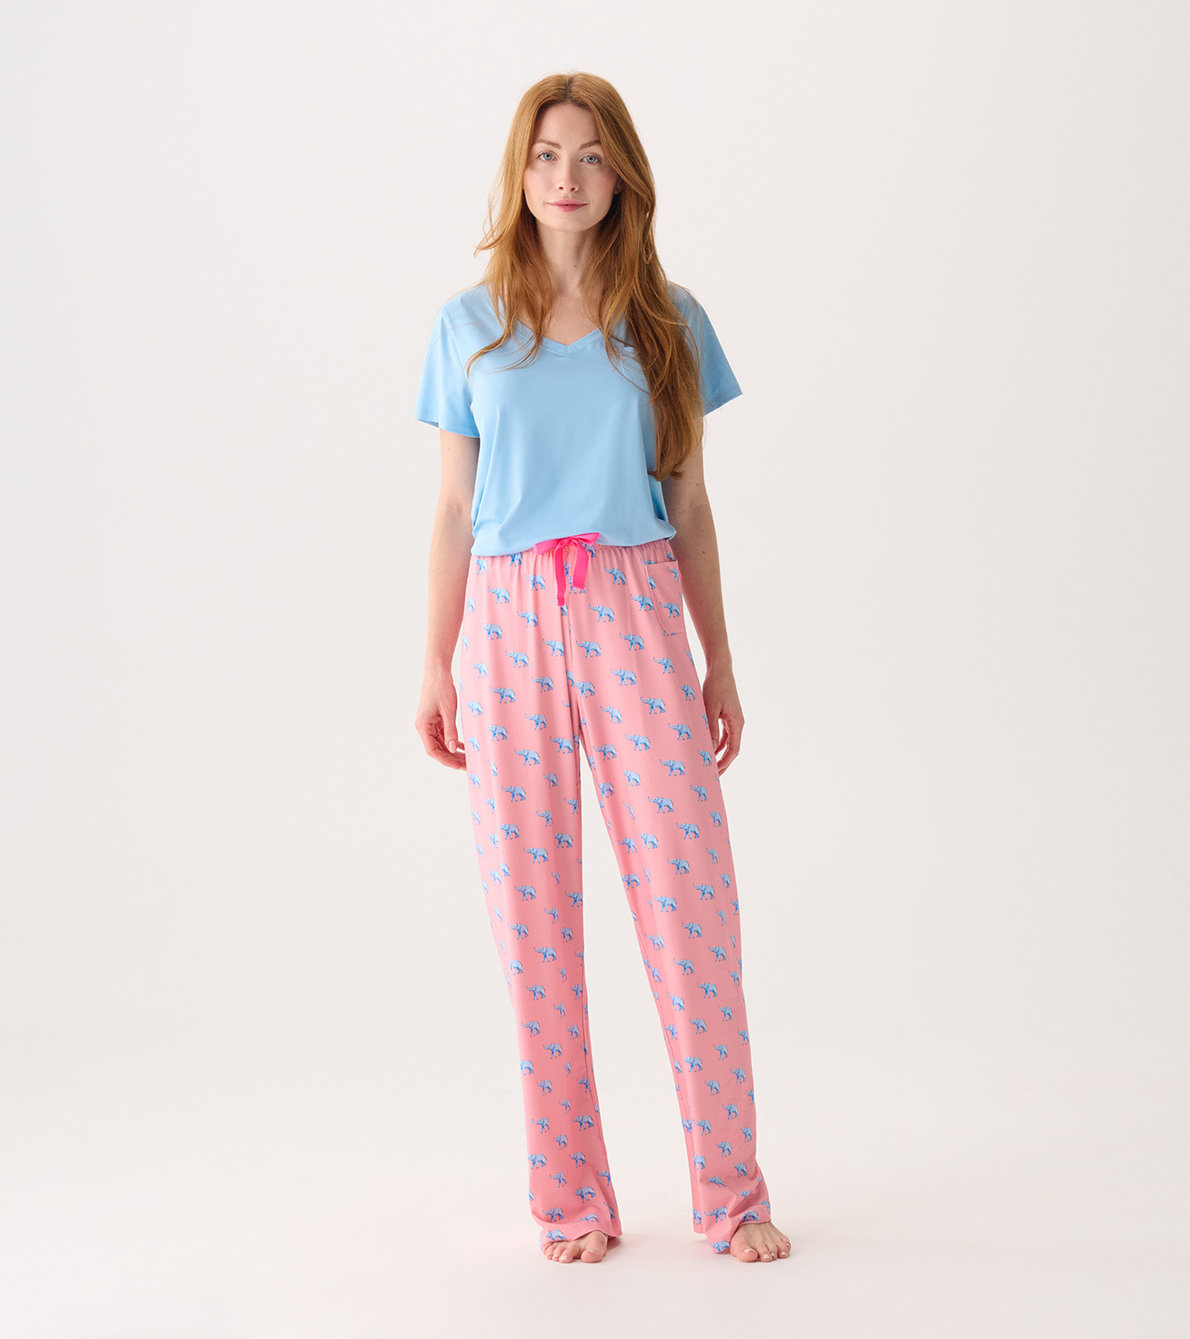 Agrandir l'image de Pantalon de pyjama – Éléphantastique